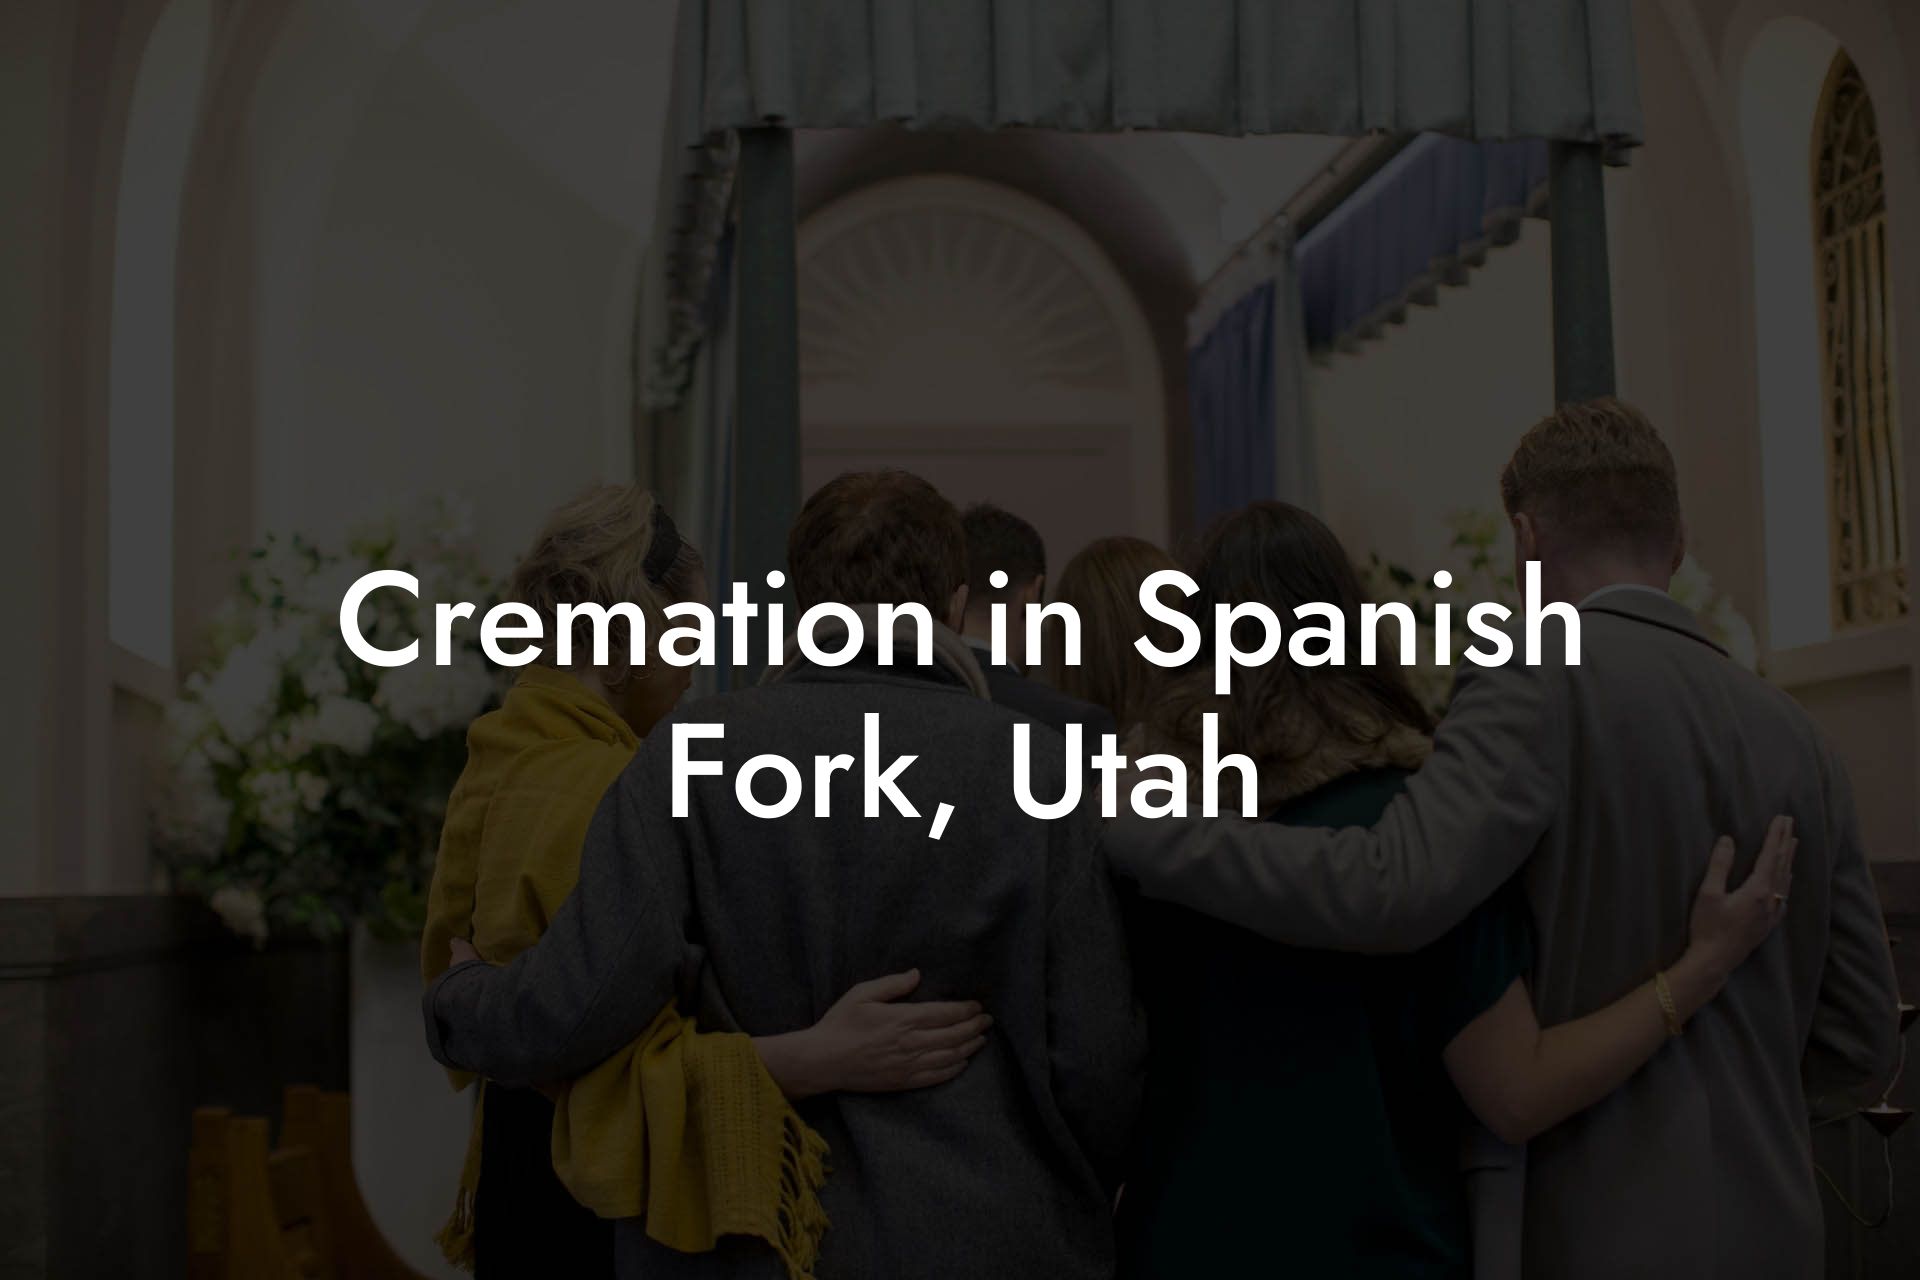 Cremation in Spanish Fork, Utah